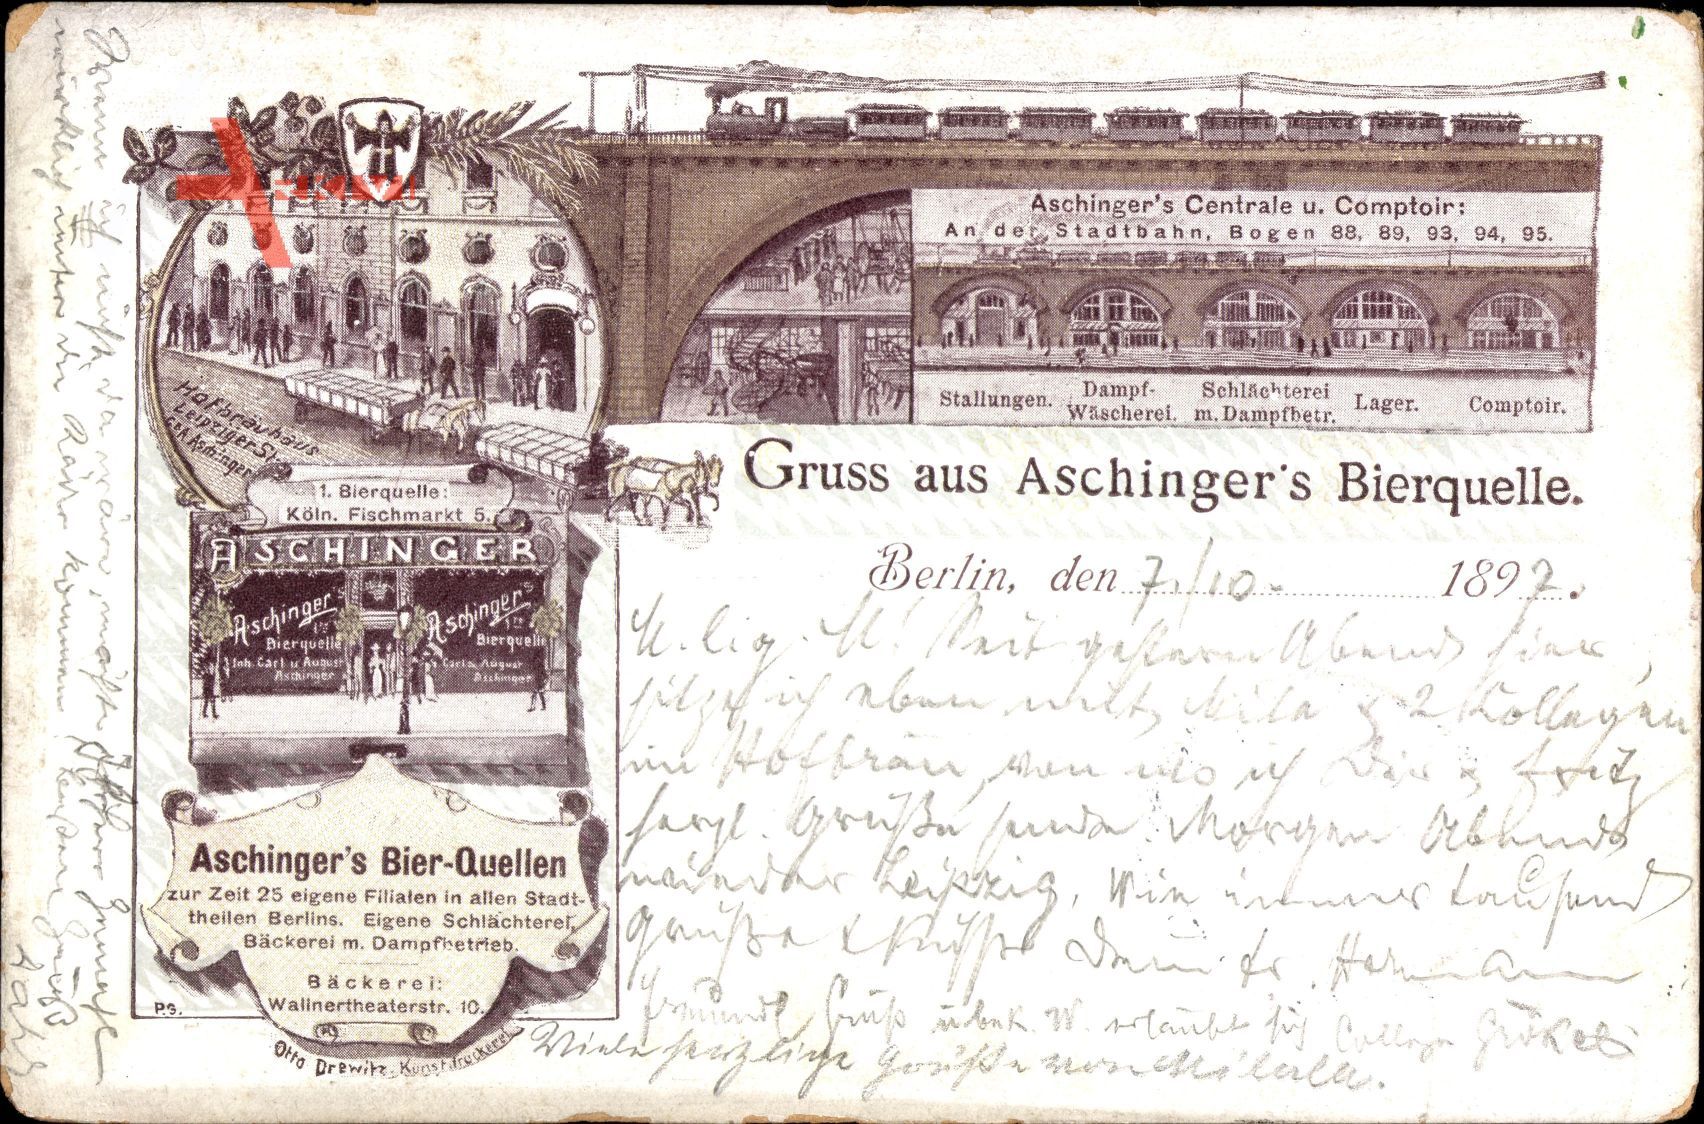 Berlin Mitte, Aschinger's Bierquelle, An der Stadtbahn, Walinertheaterstr.